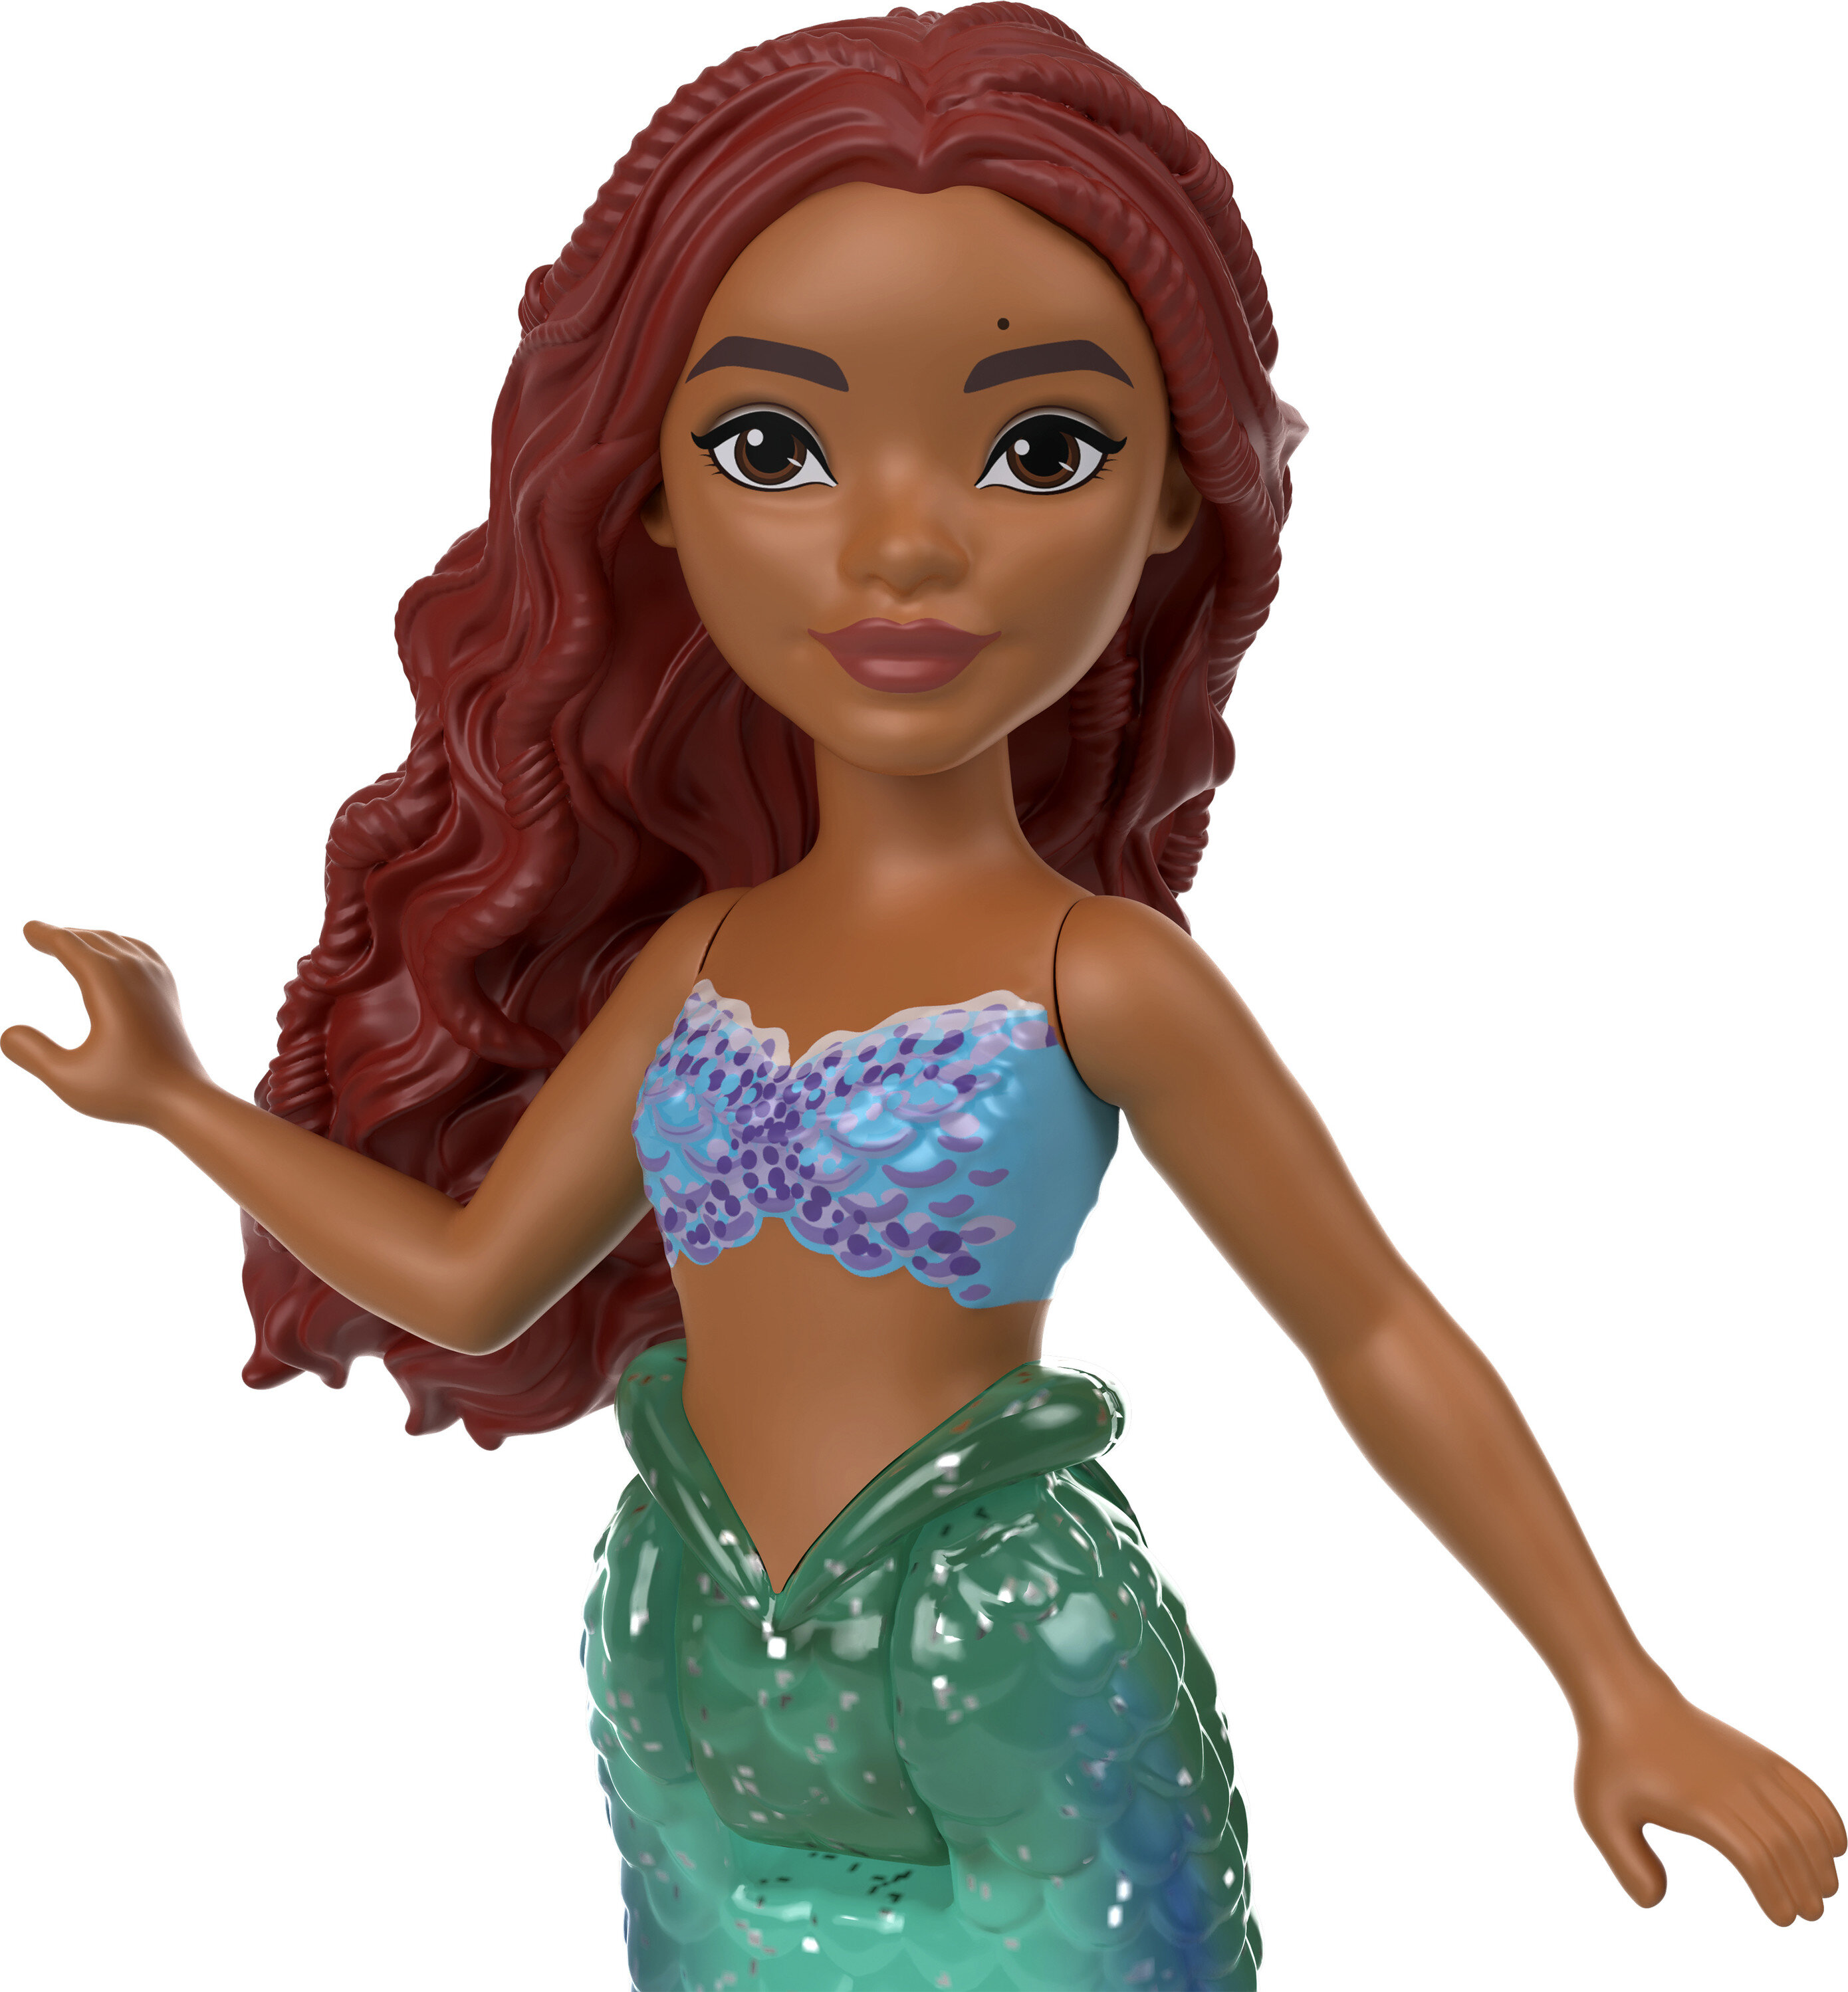 Disney The Little Mermaid Ariel Small Mermaid Doll - image 3 of 6